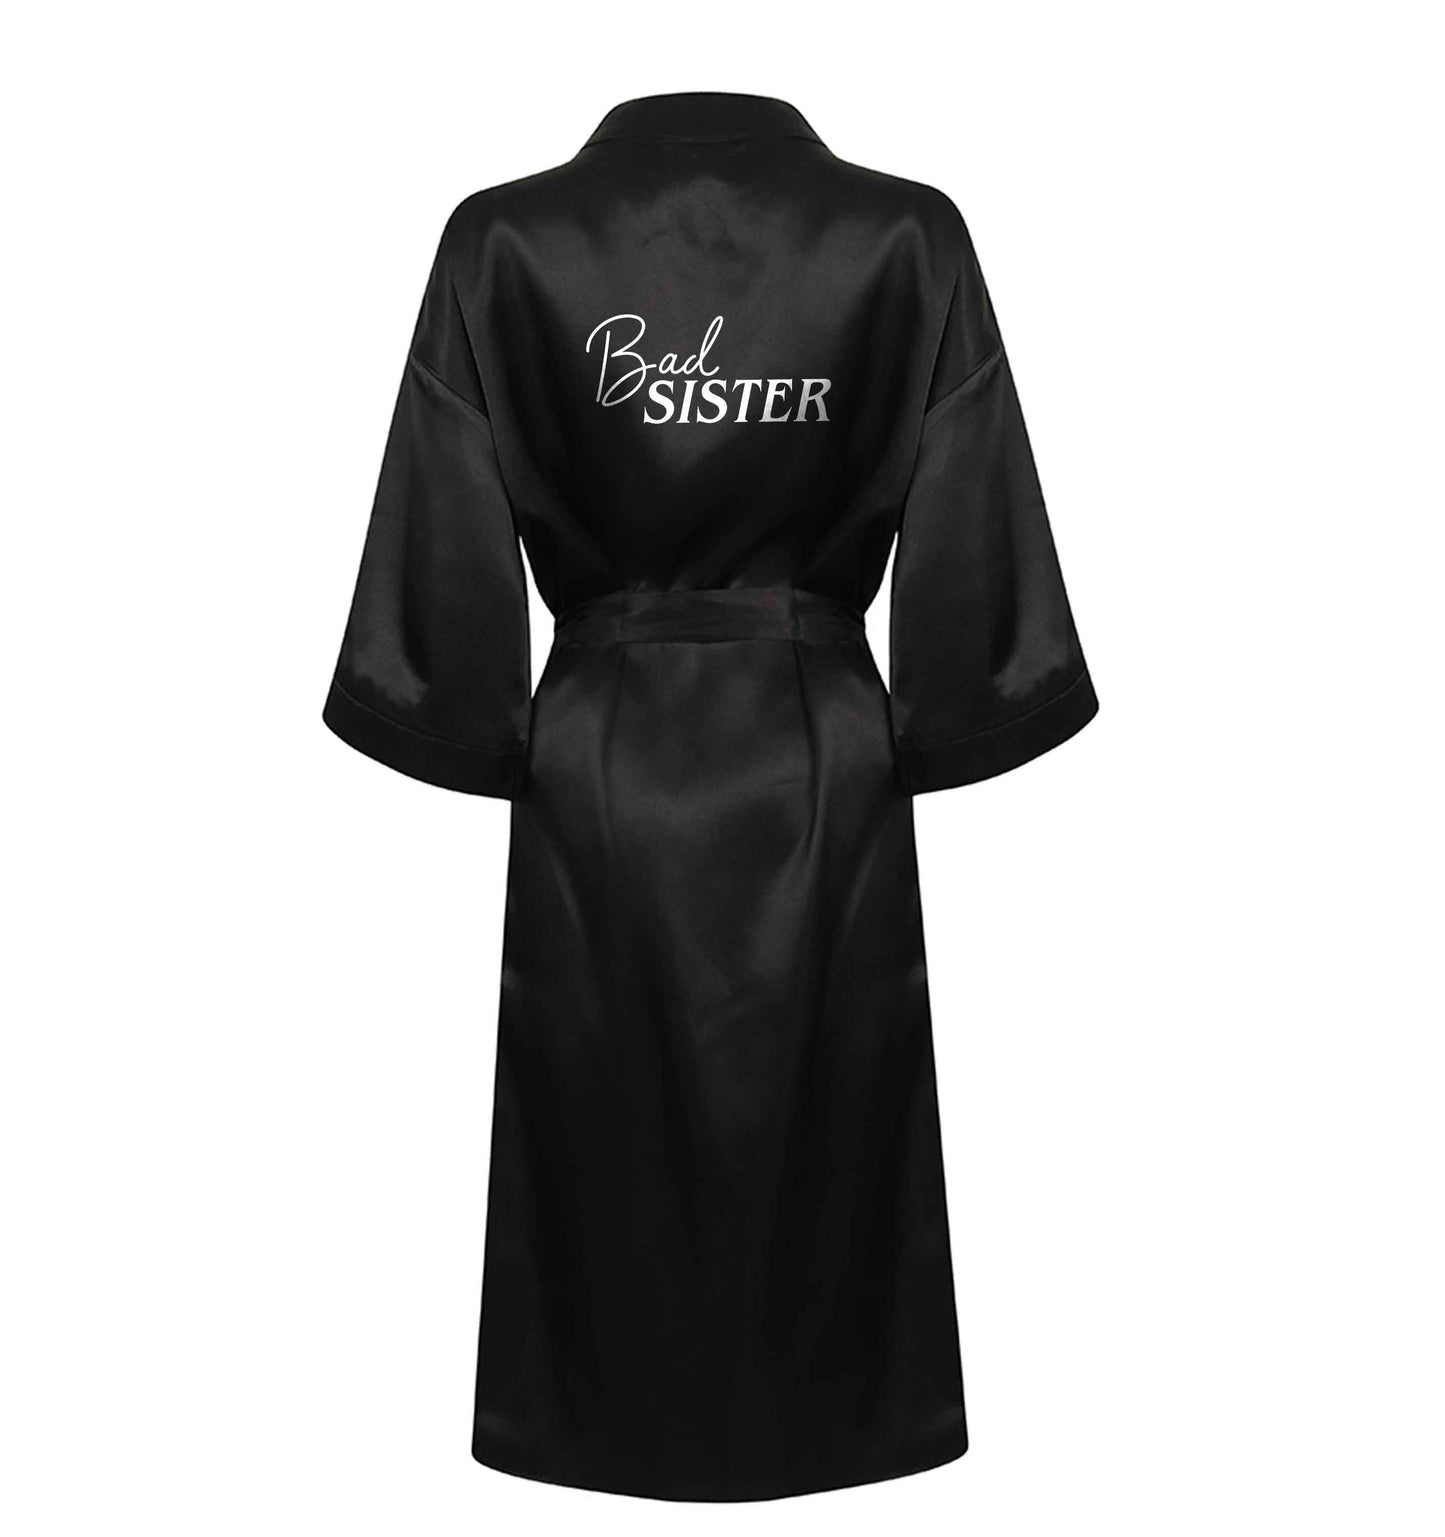 Bad sister XL/XXL black ladies dressing gown size 16/18